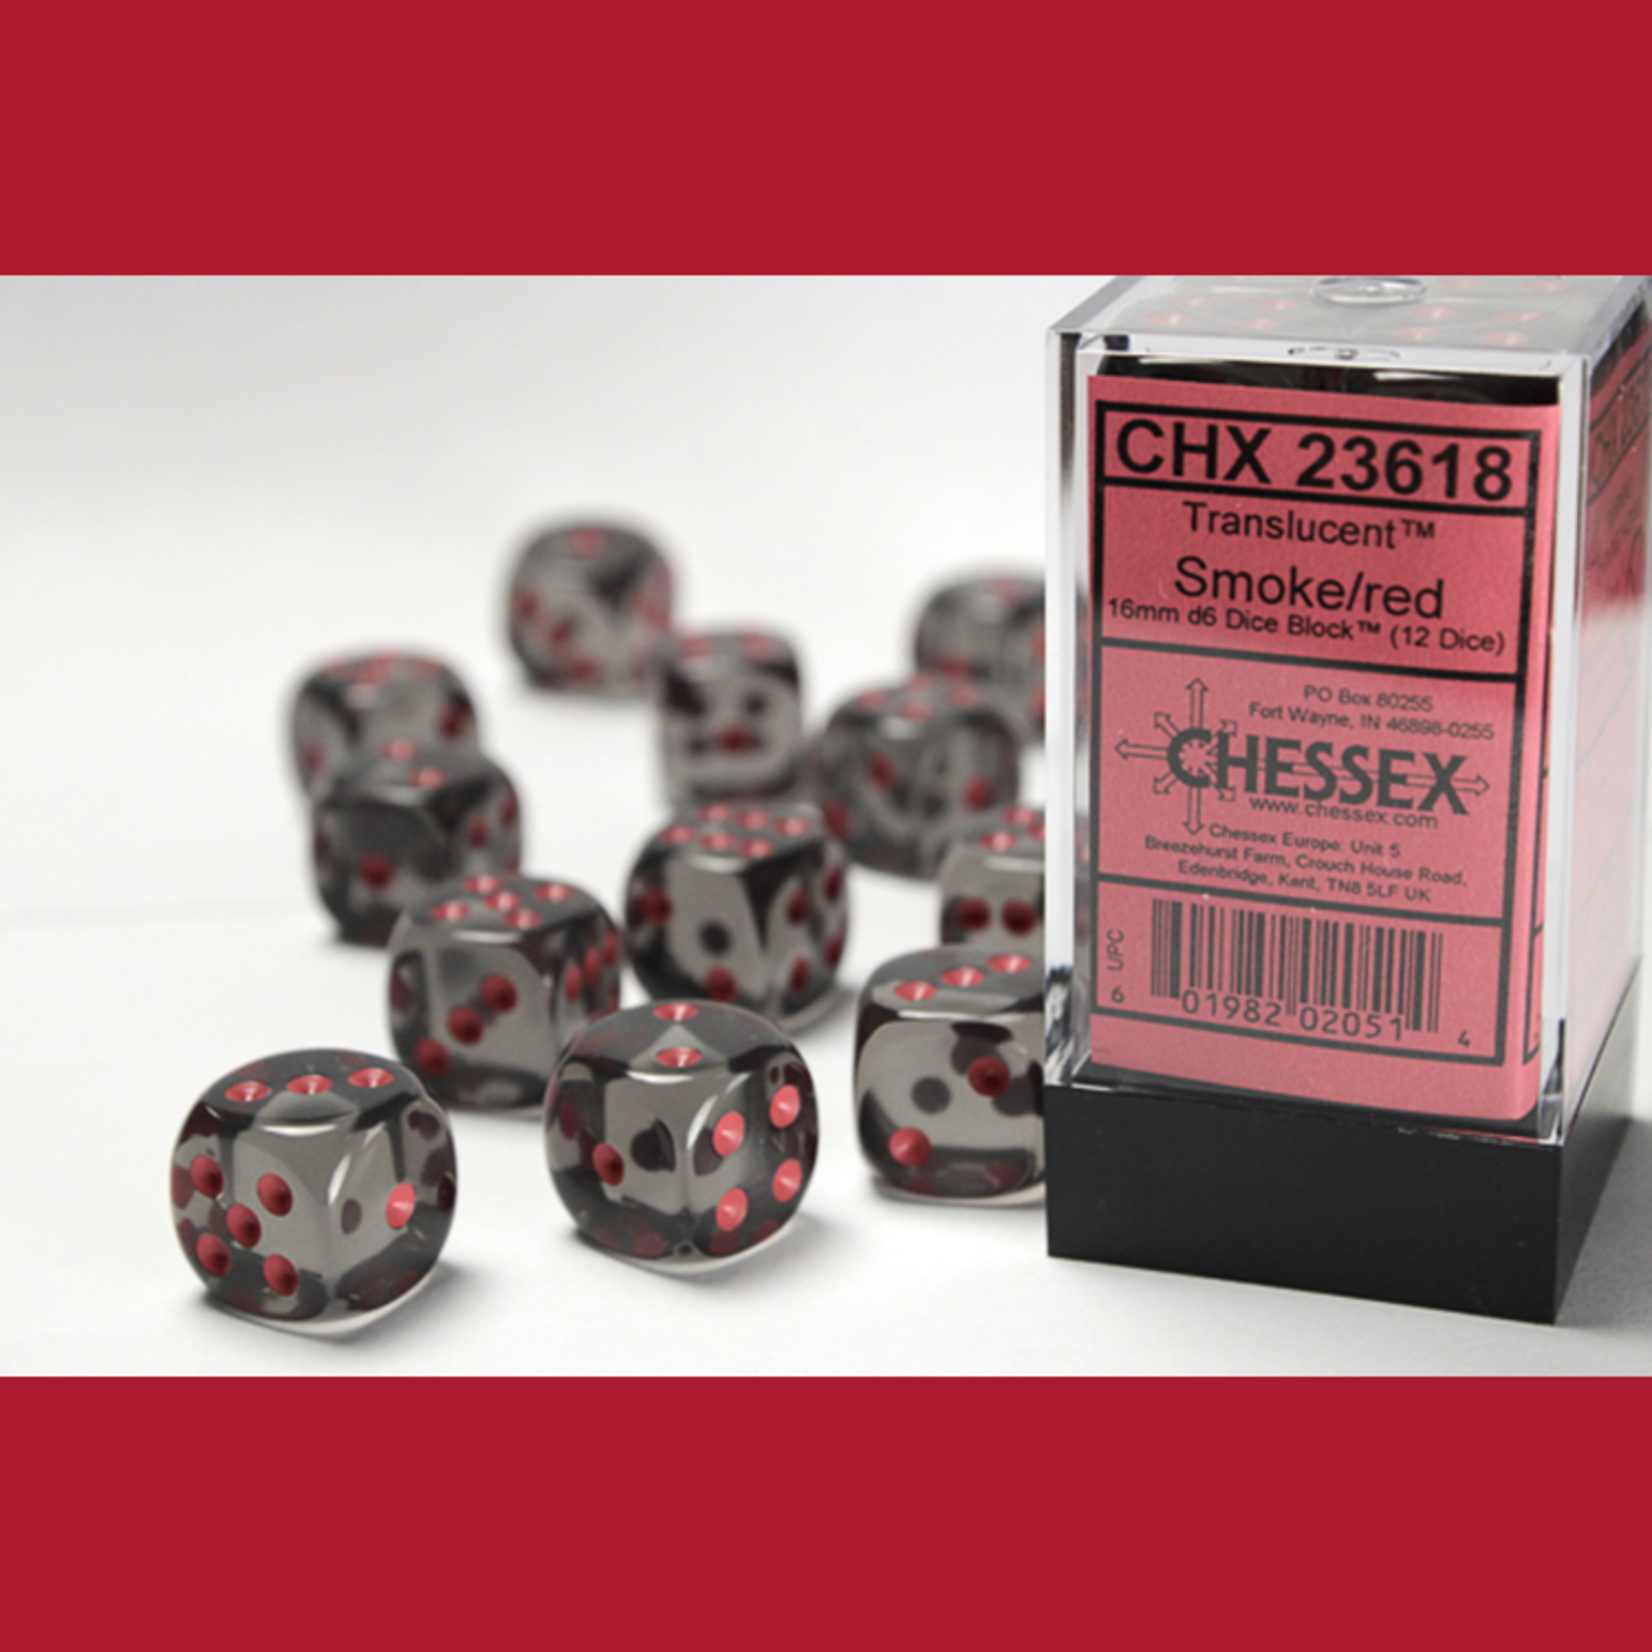 Chessex CHX 23618 Translucent Smoke / Red 16mm (12d6)